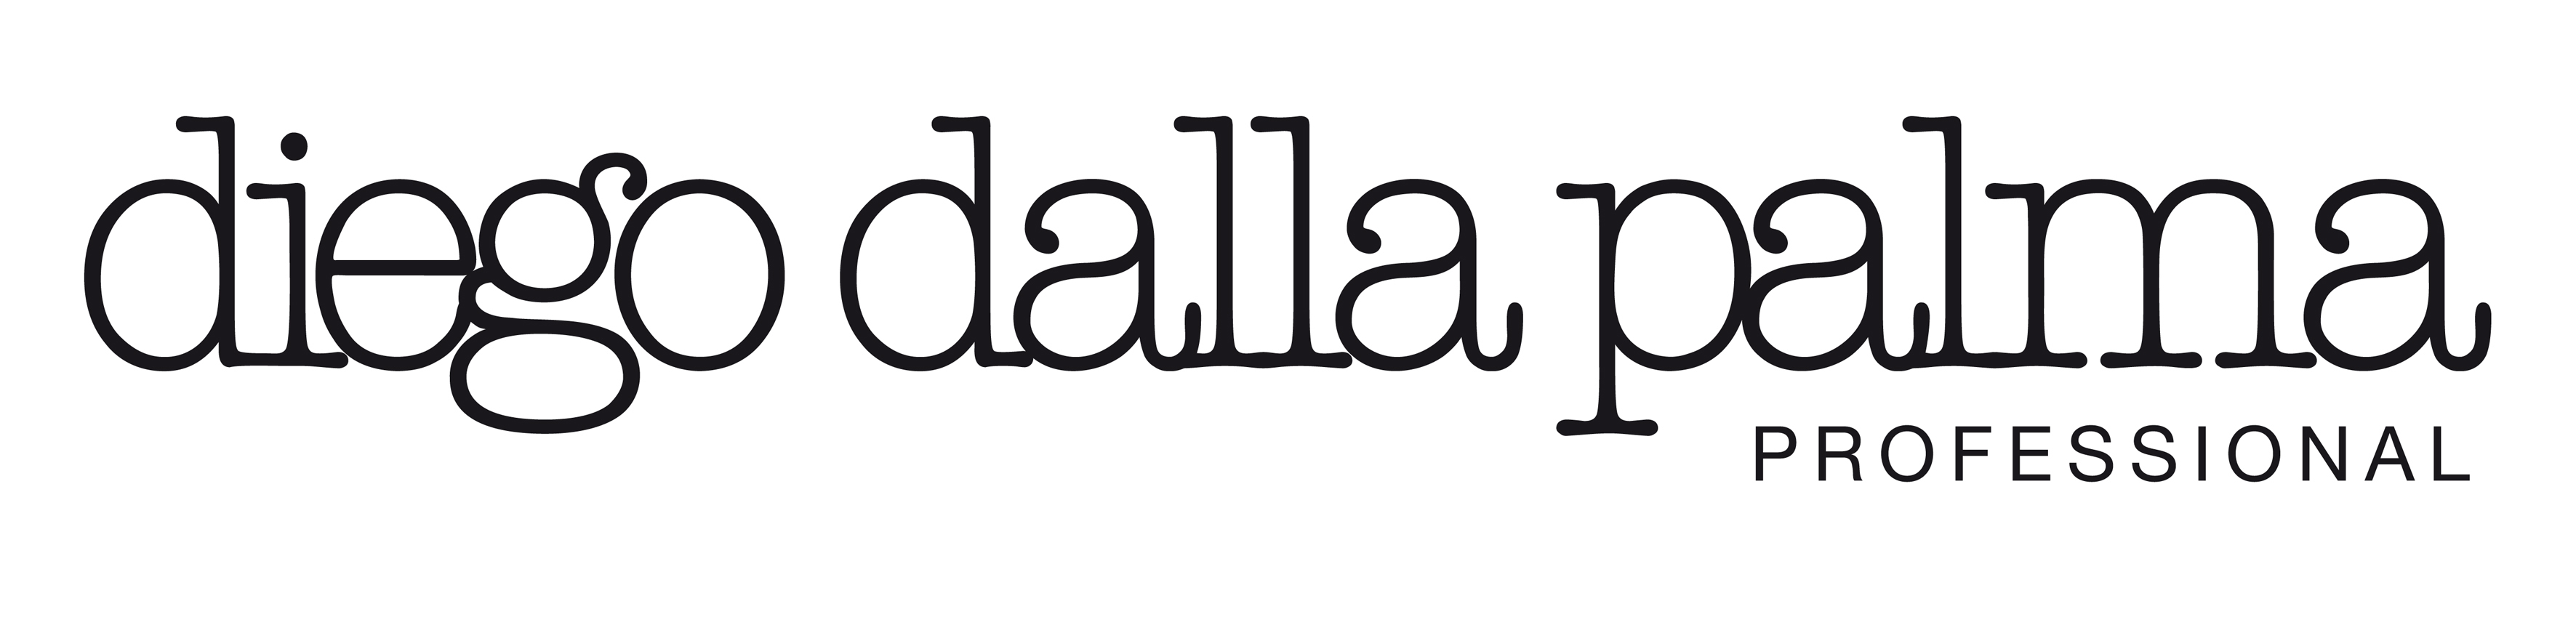 Diego Dalla Palma Professional logo